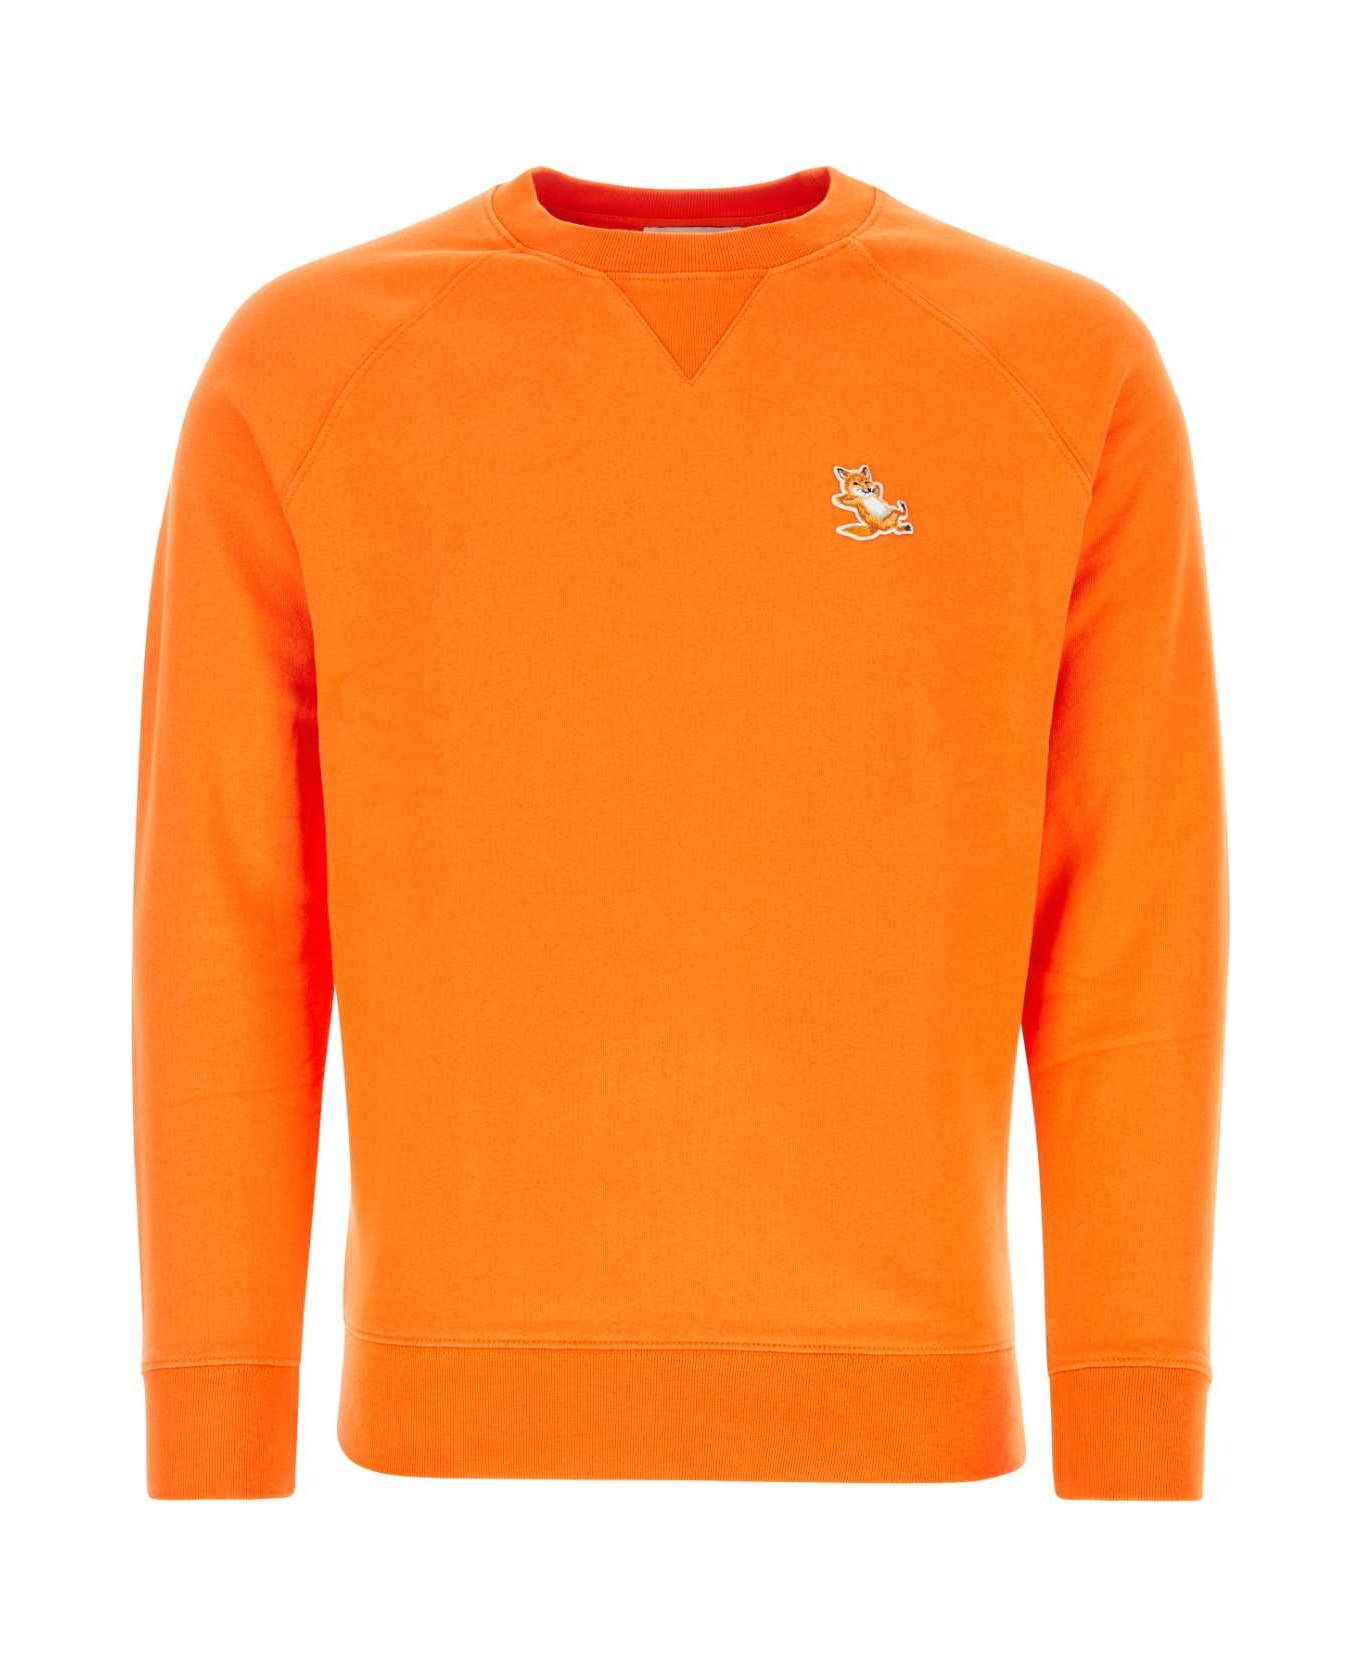 Maison Kitsuné Orange Cotton Sweatshirt - P851